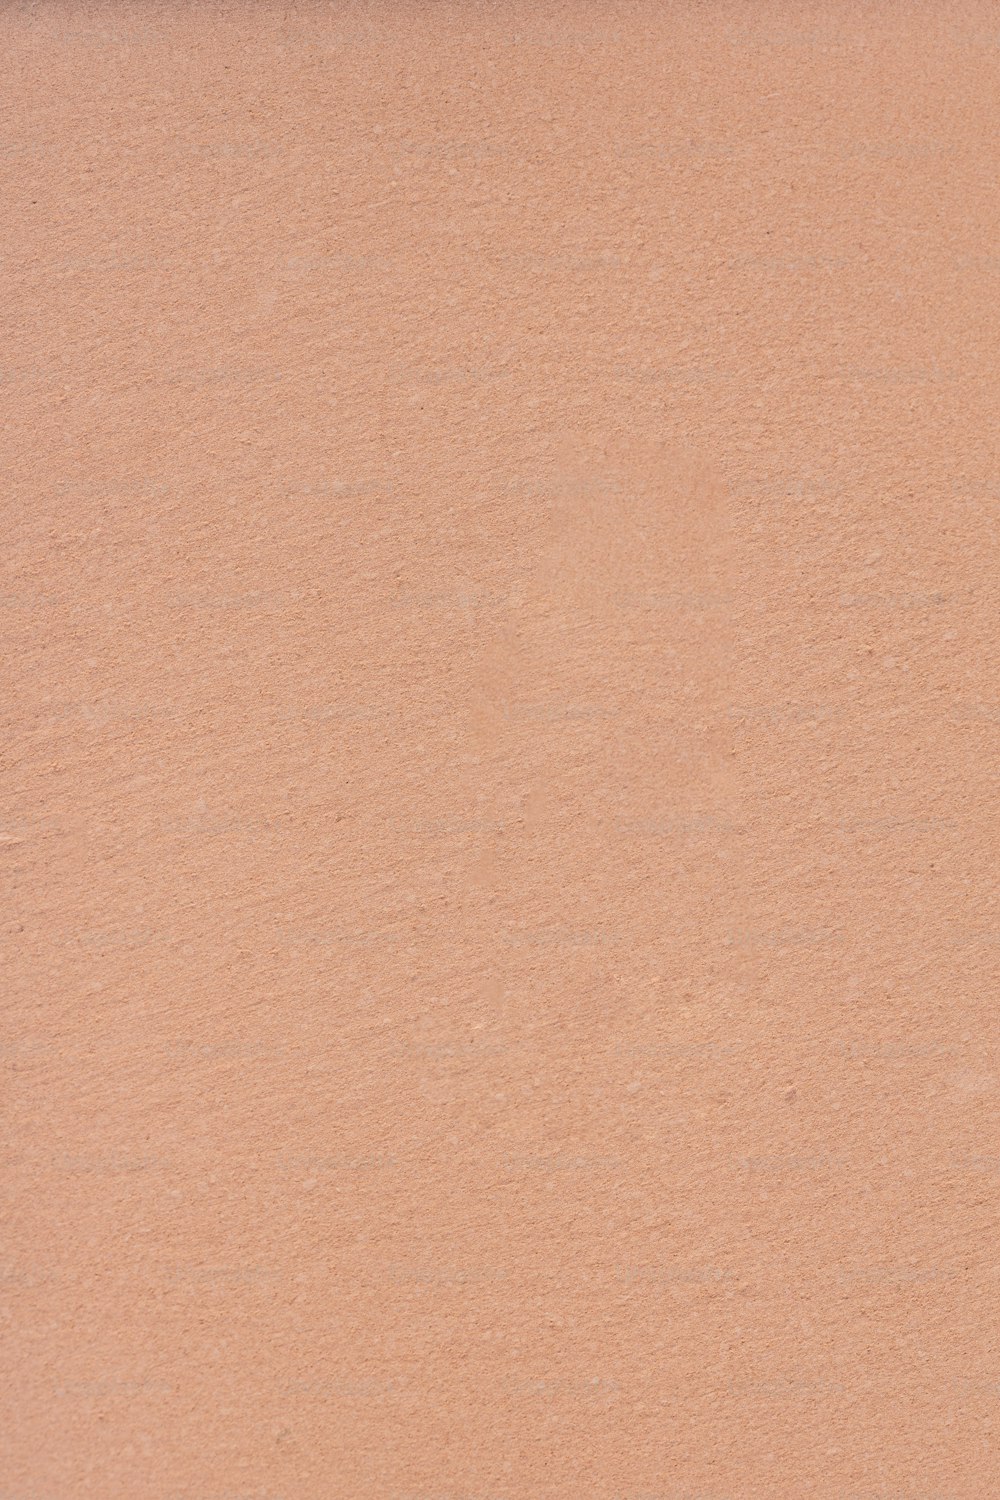 Digital Textured Salmon Pink Color Background Stock Illustration